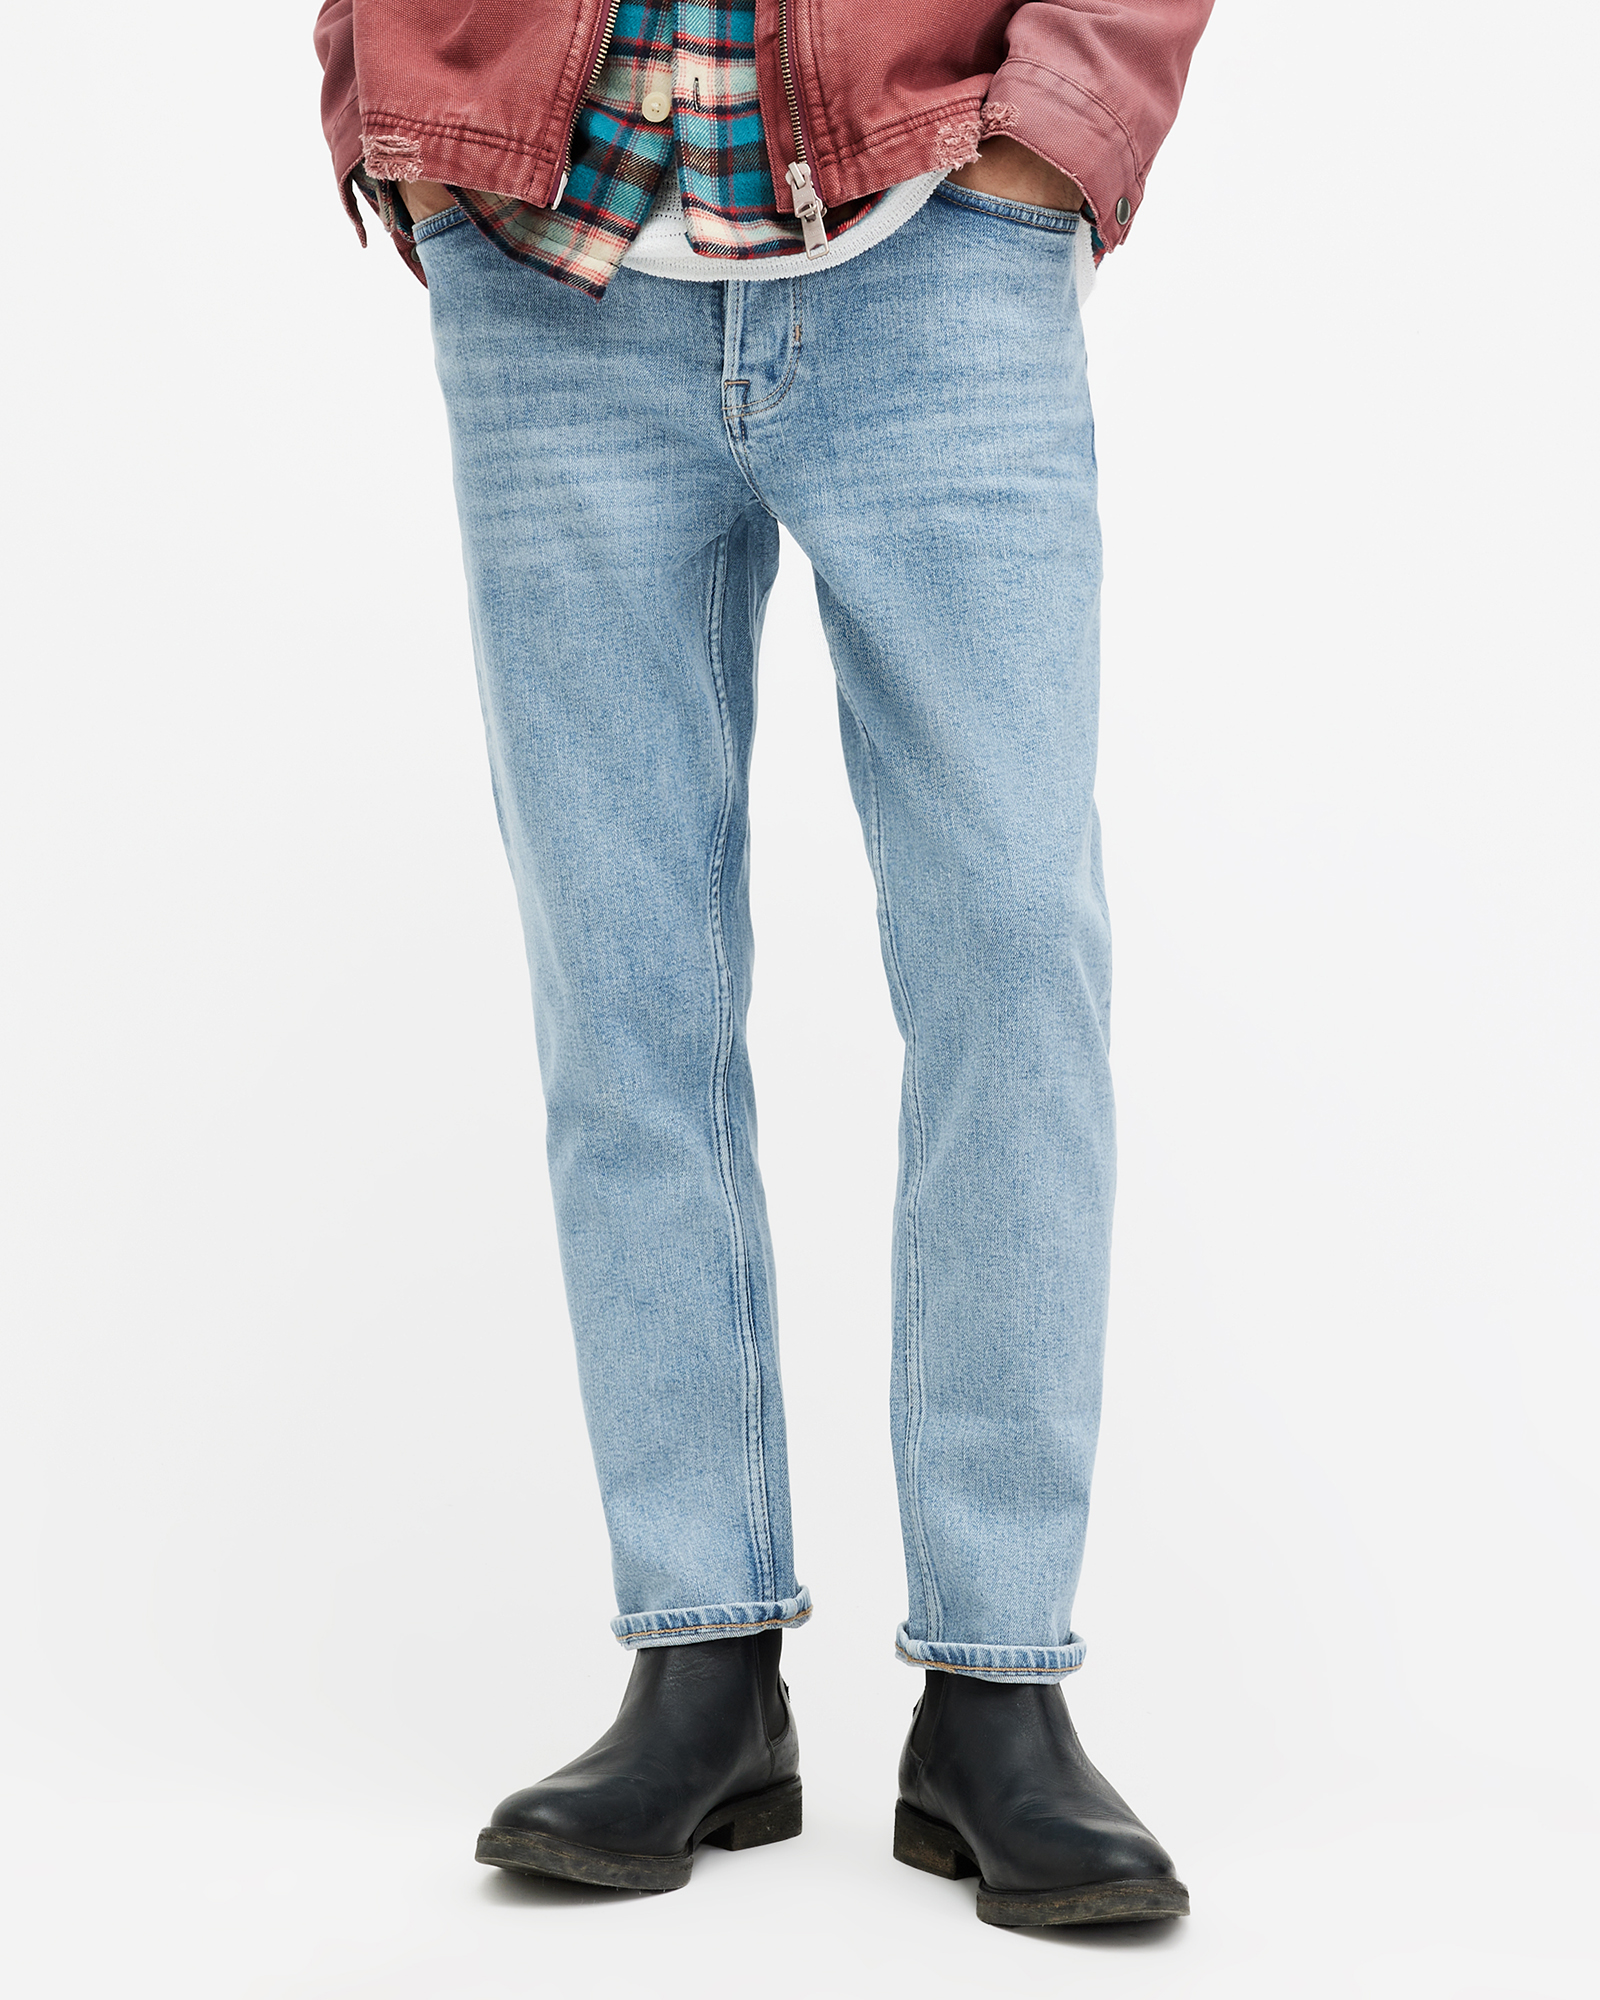 AllSaints Dean Slim Fit Cropped Denim Jeans,, Vintage Indigo